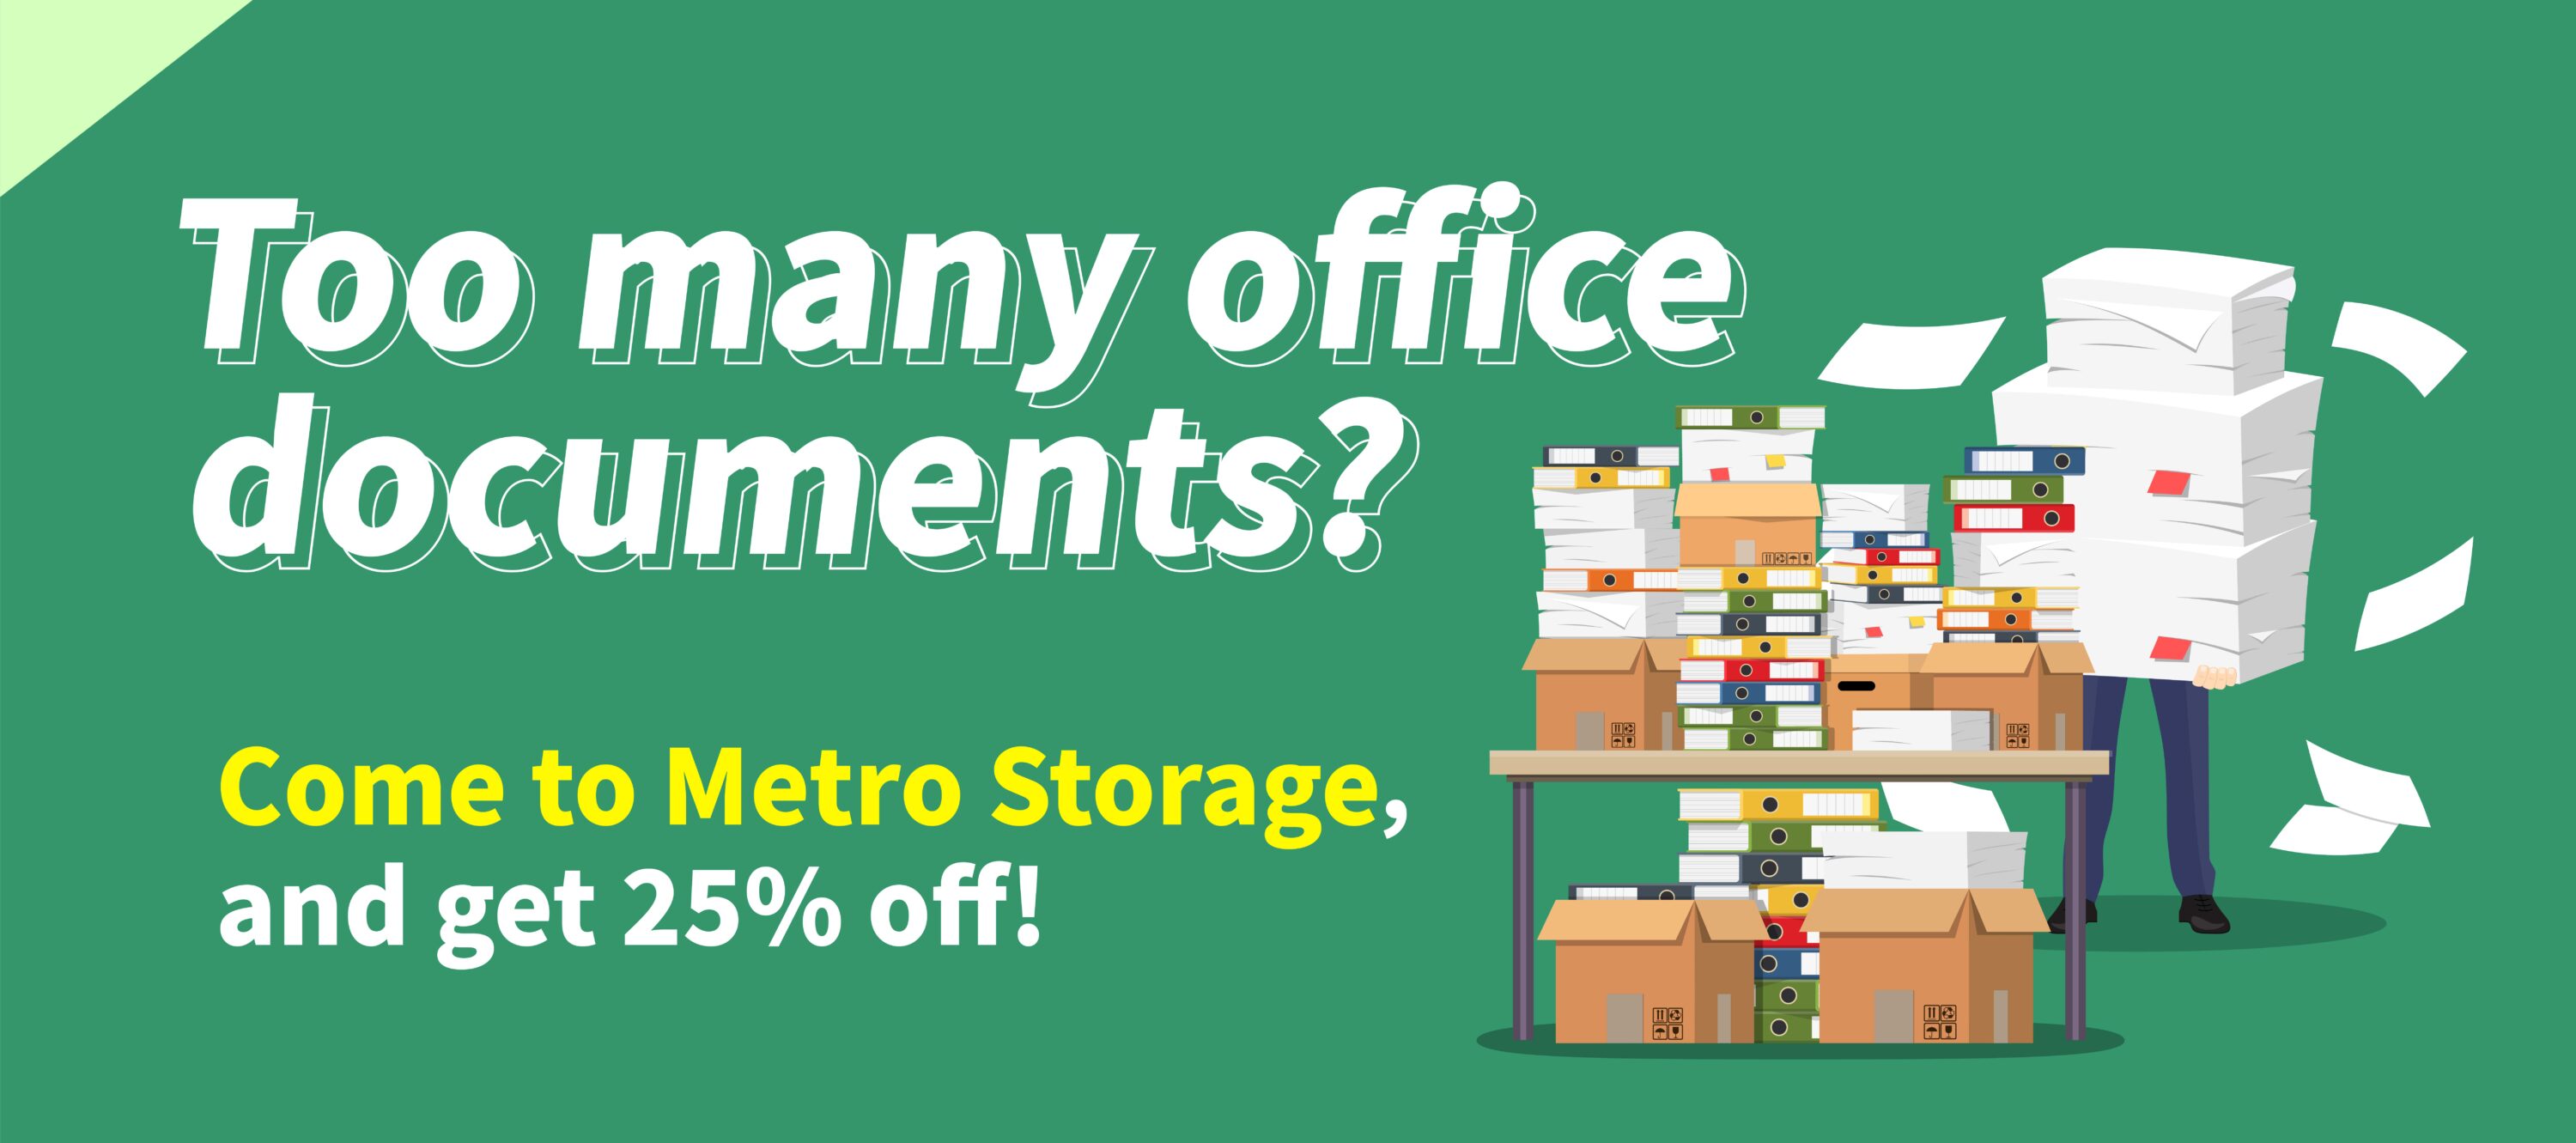 Metro Storage B2B Corporate Offer